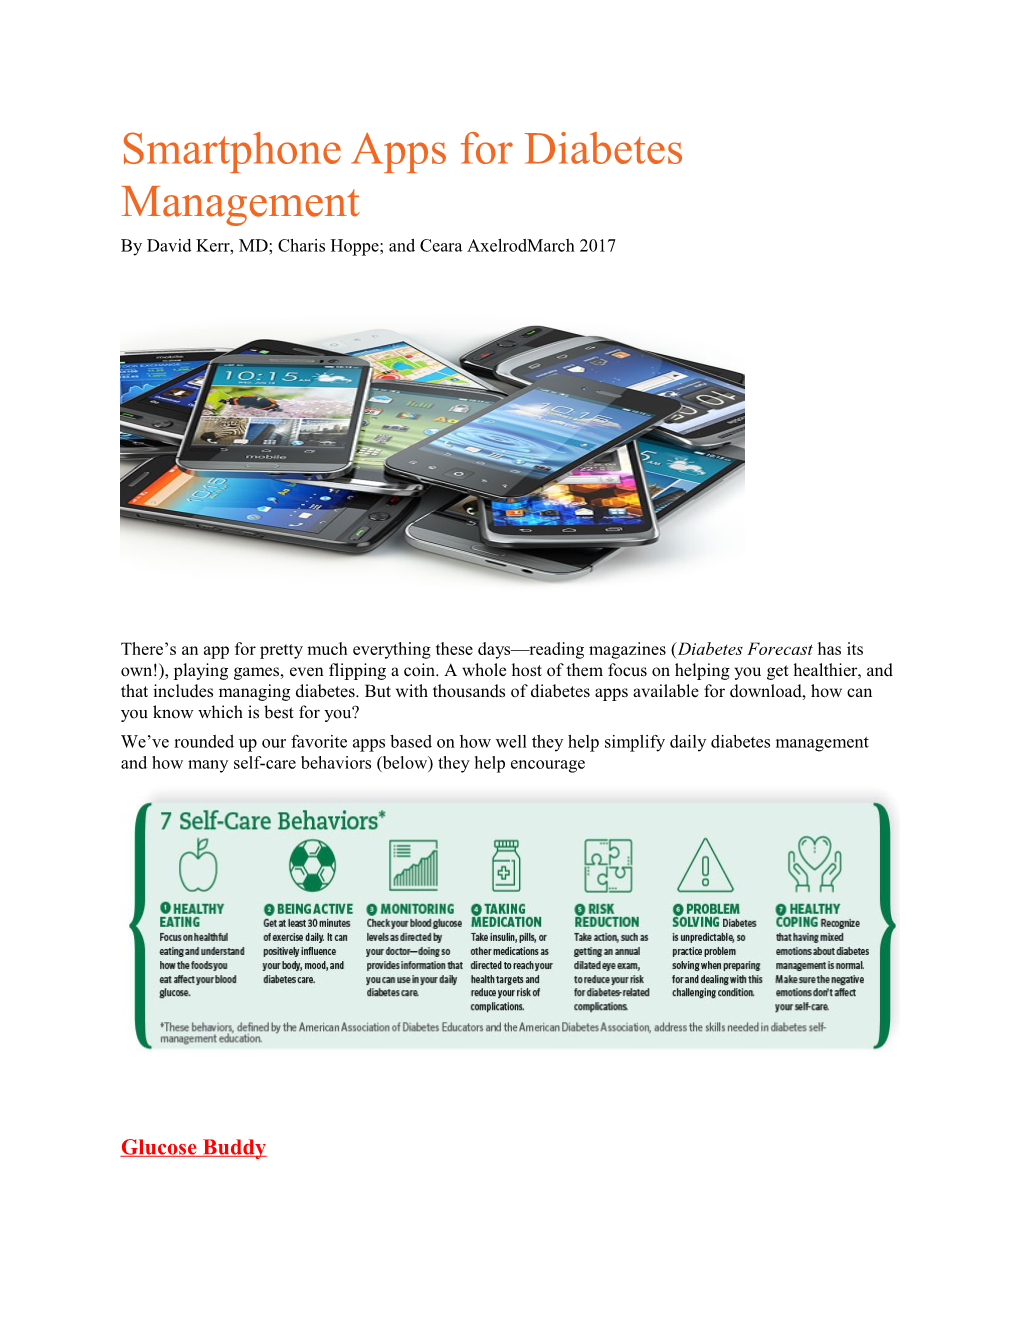 Smartphone Apps for Diabetes Management